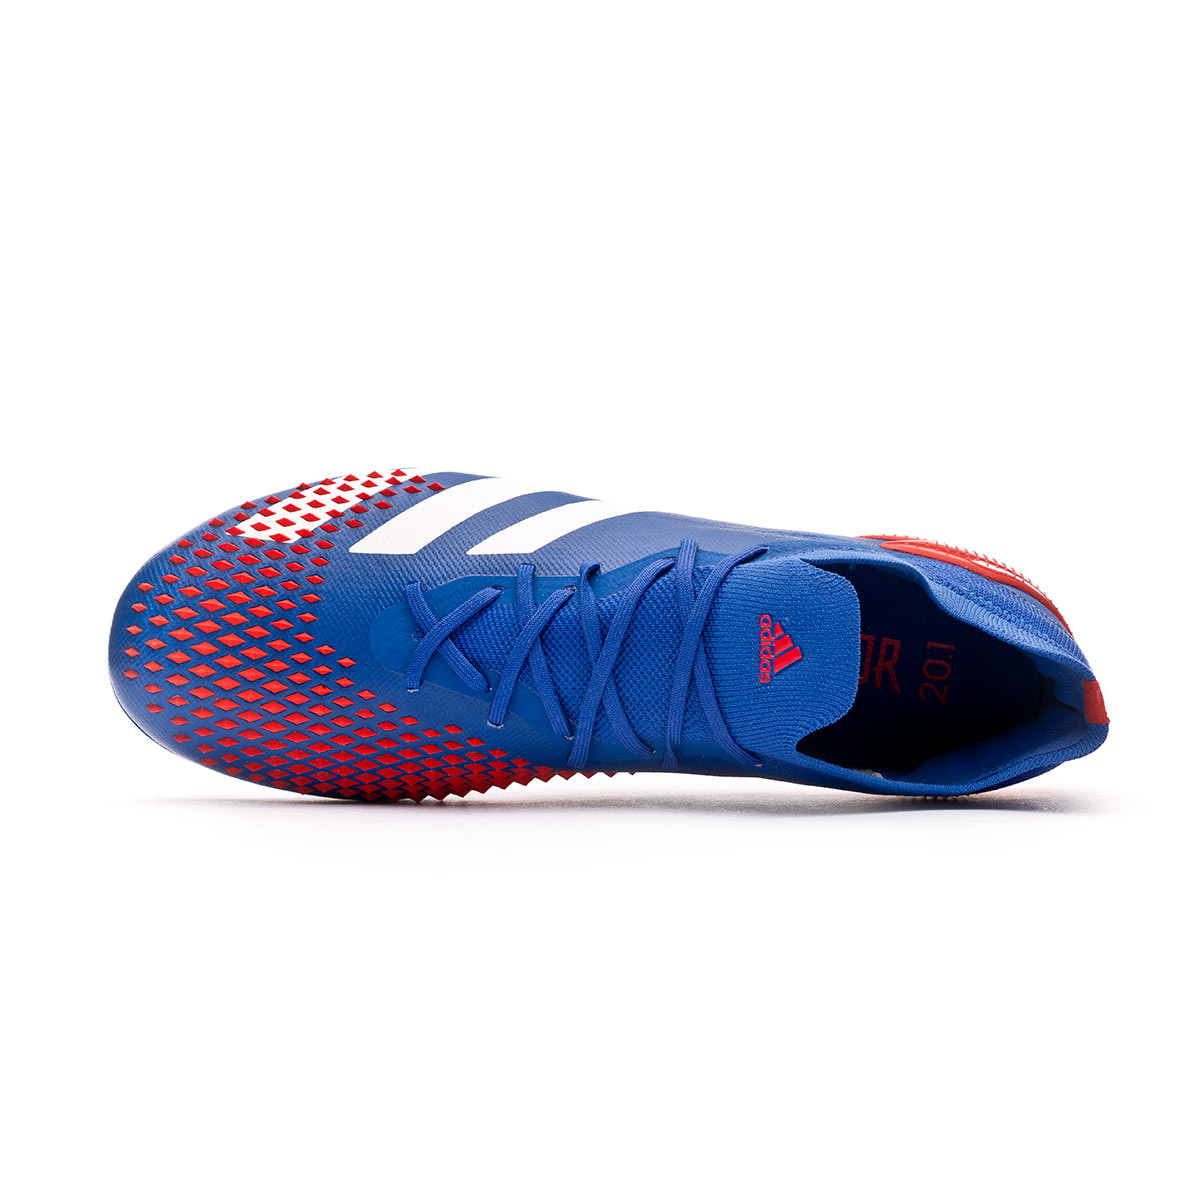 adidas predator red and blue